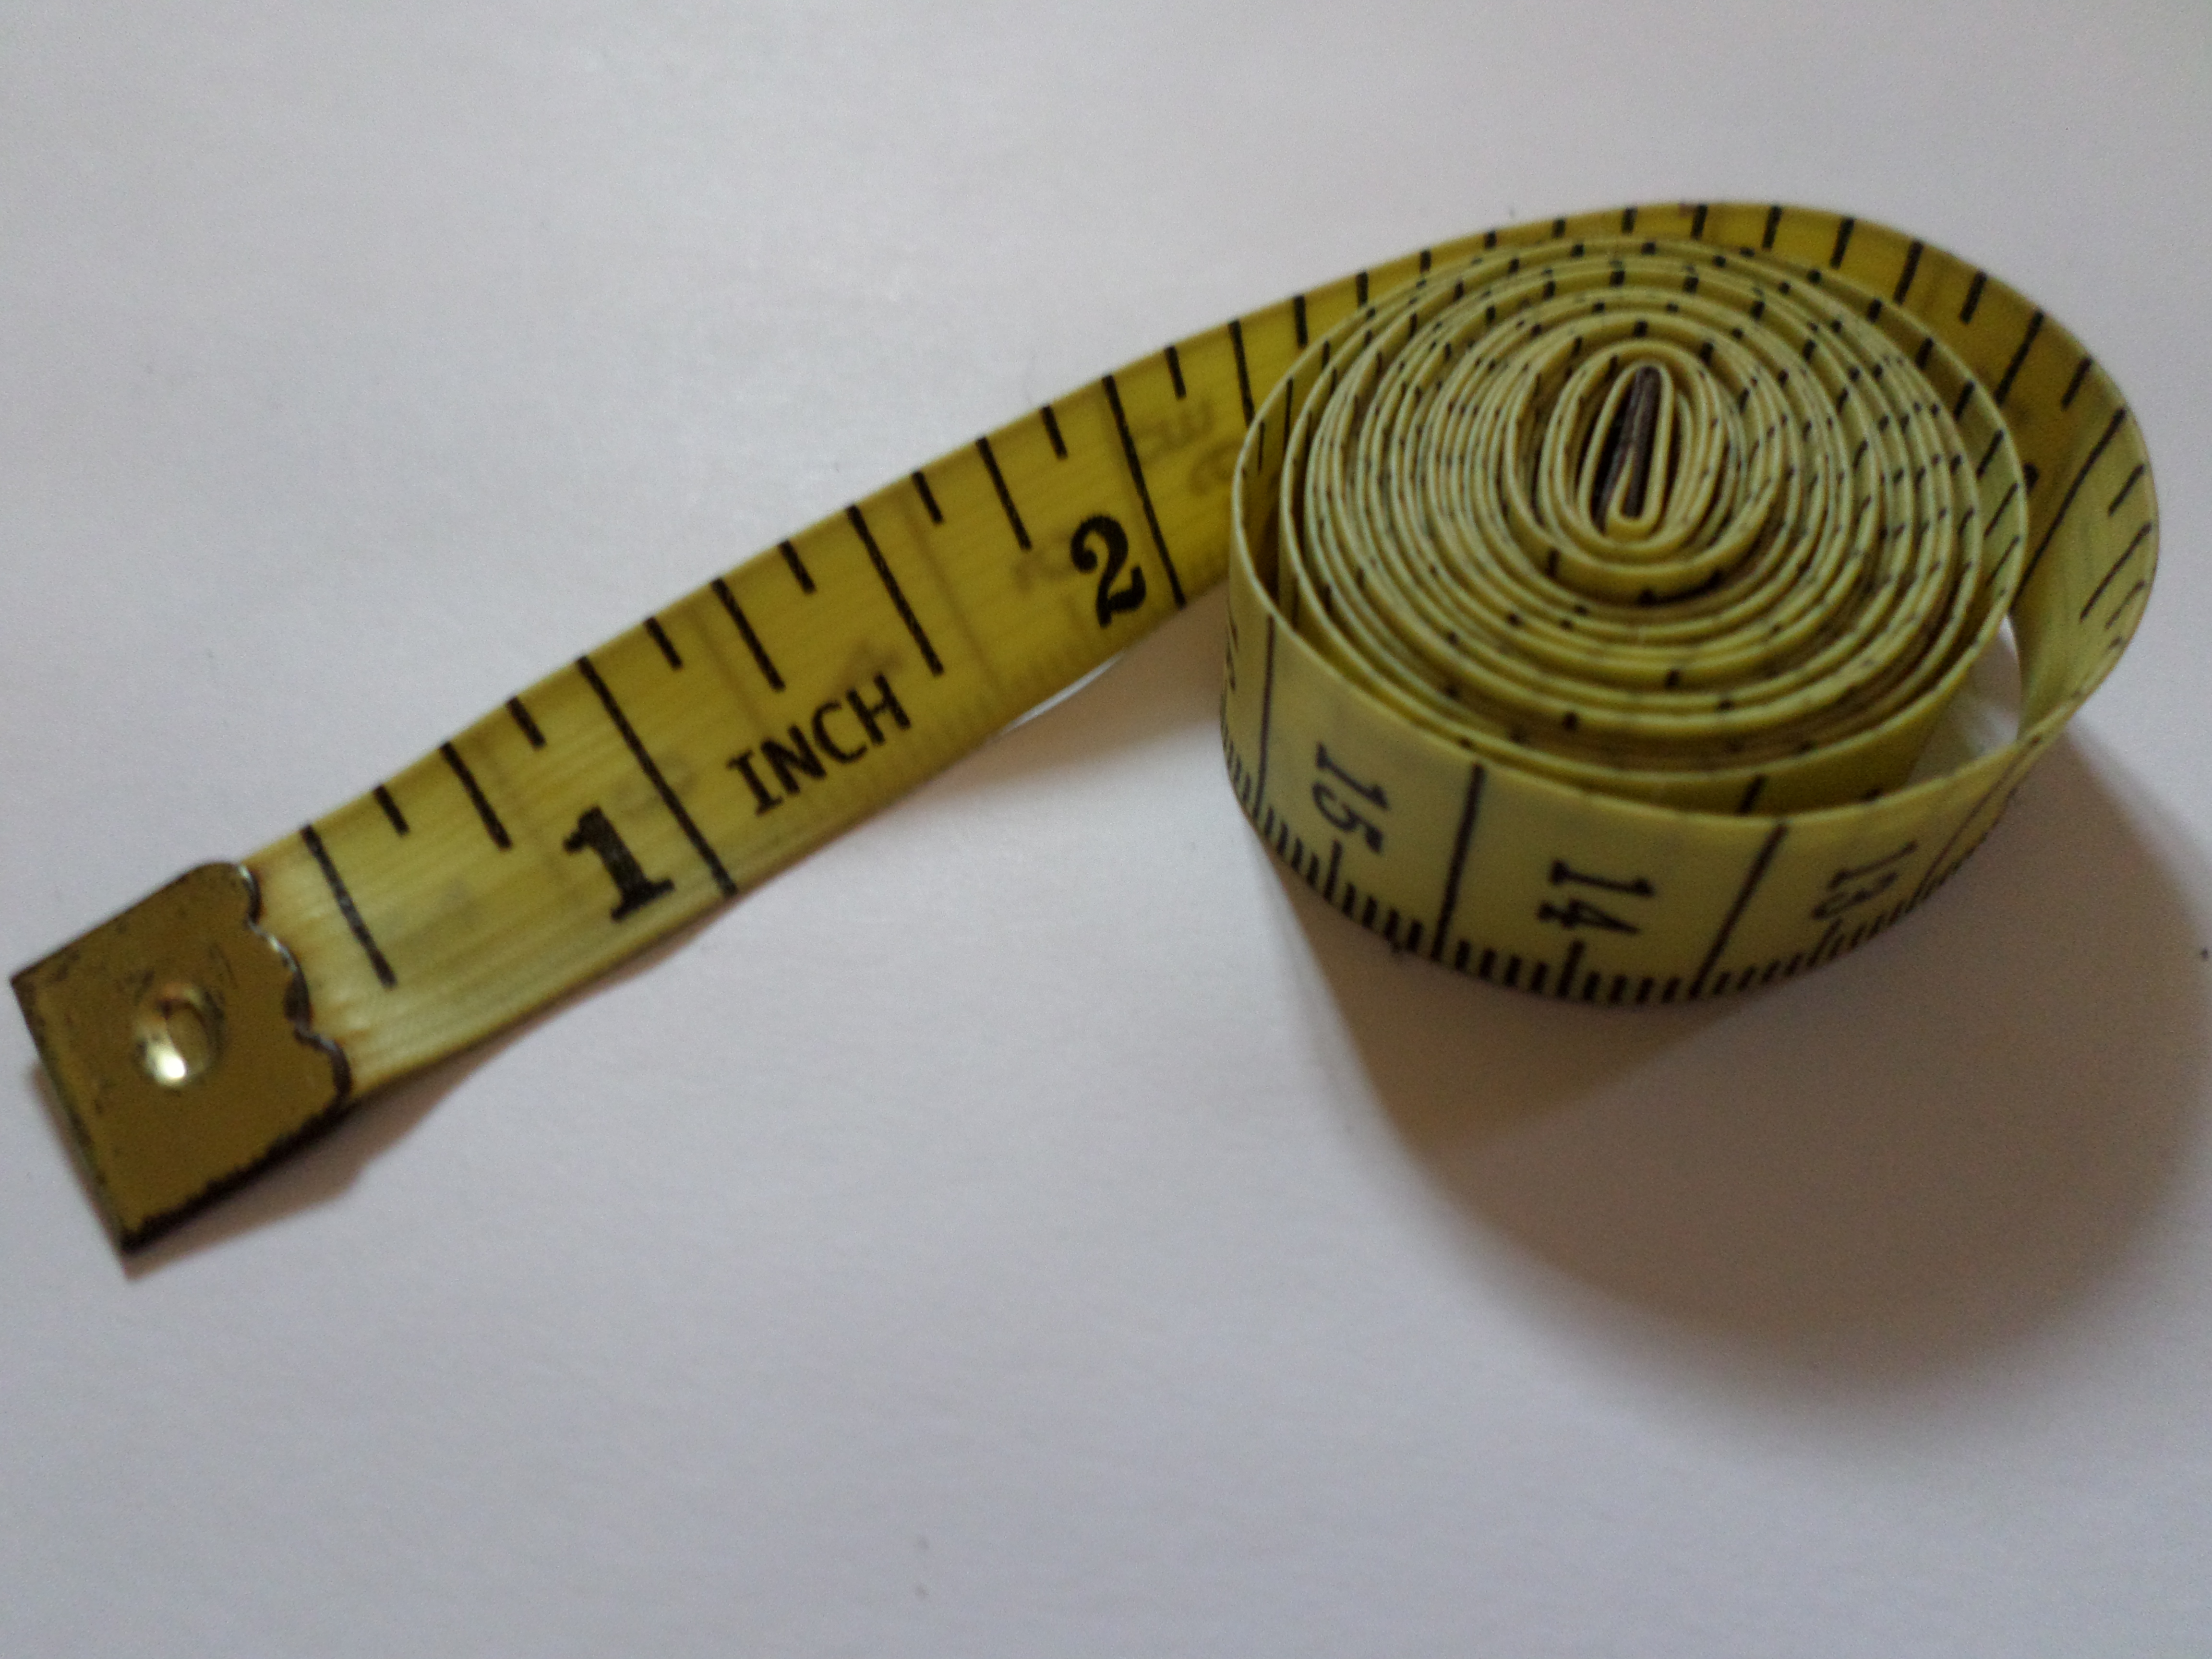 Measuring tape photo